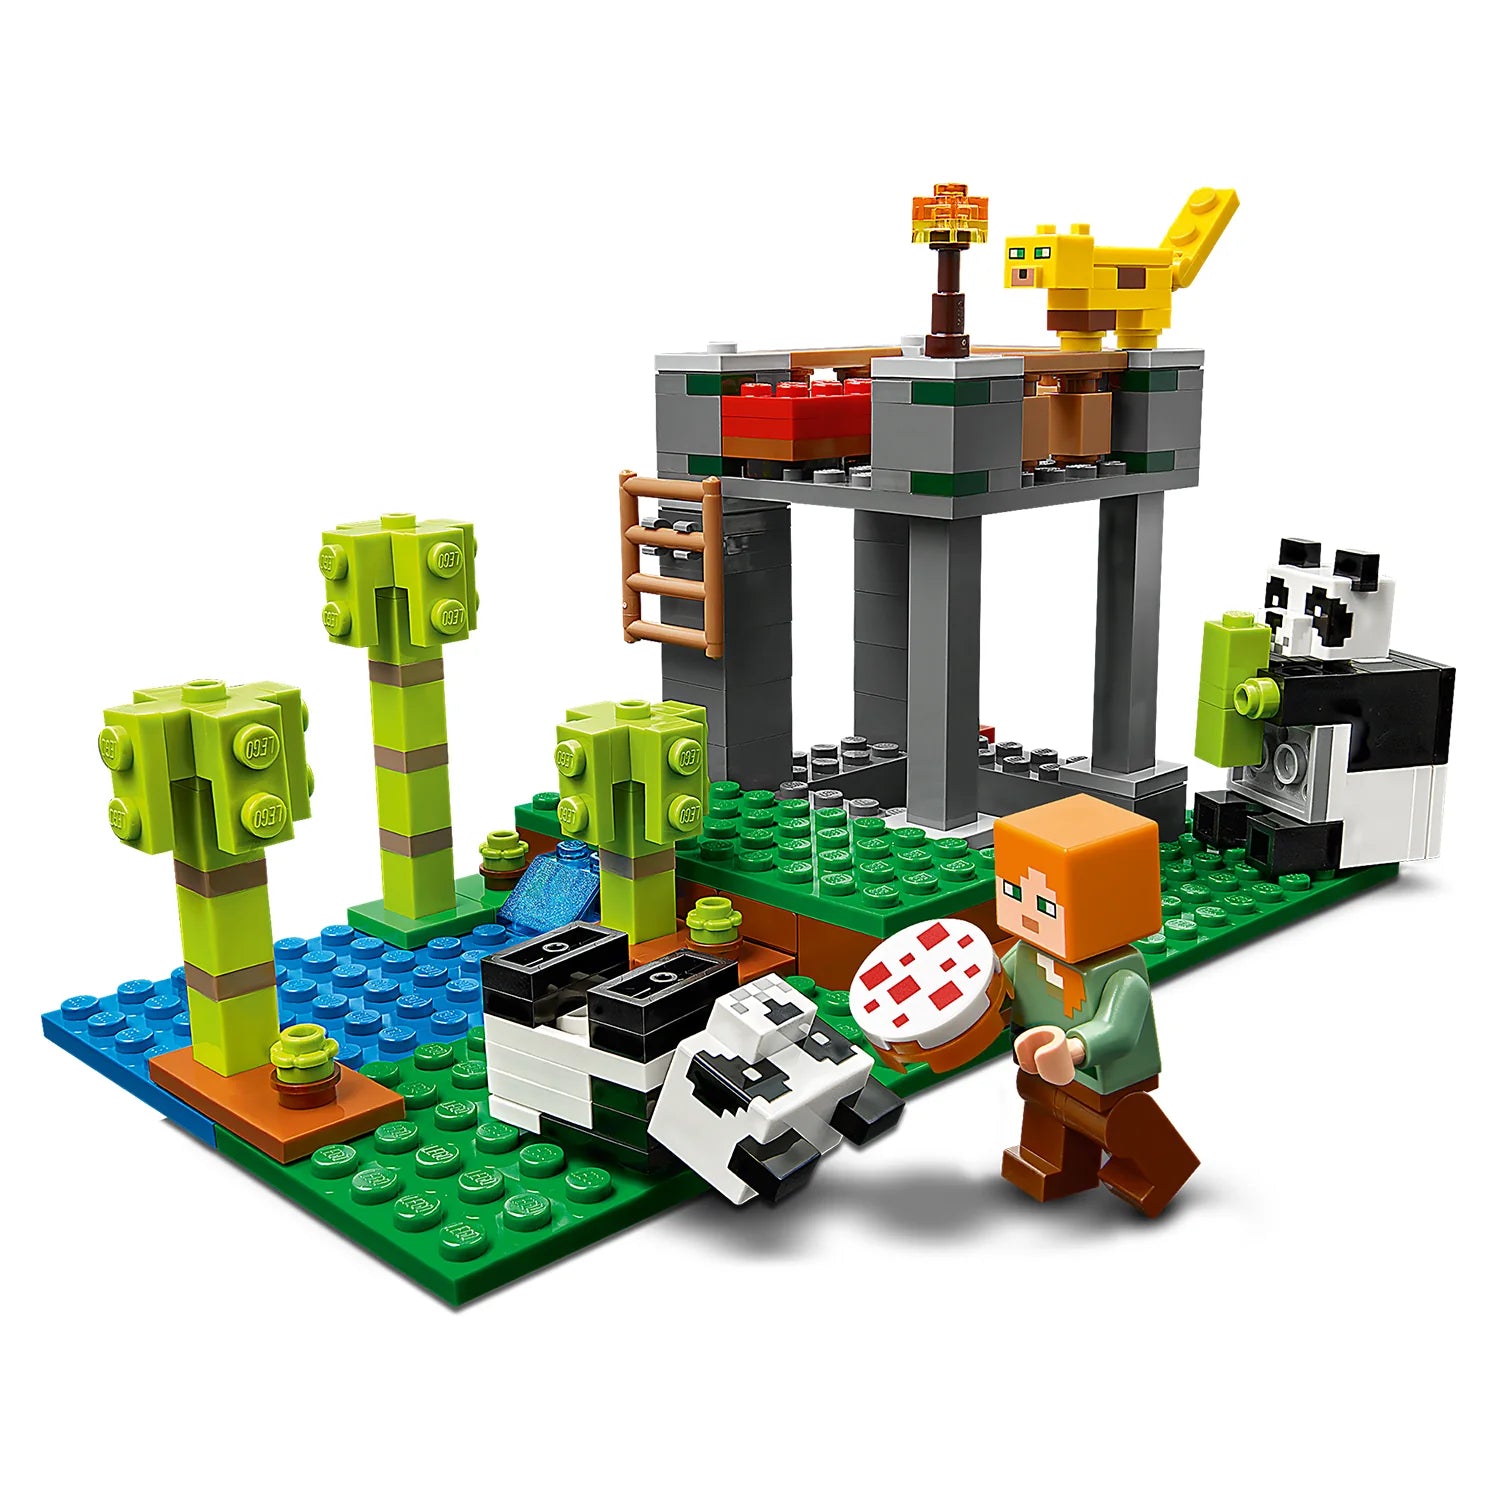 Panda enclosure - Minecraft build